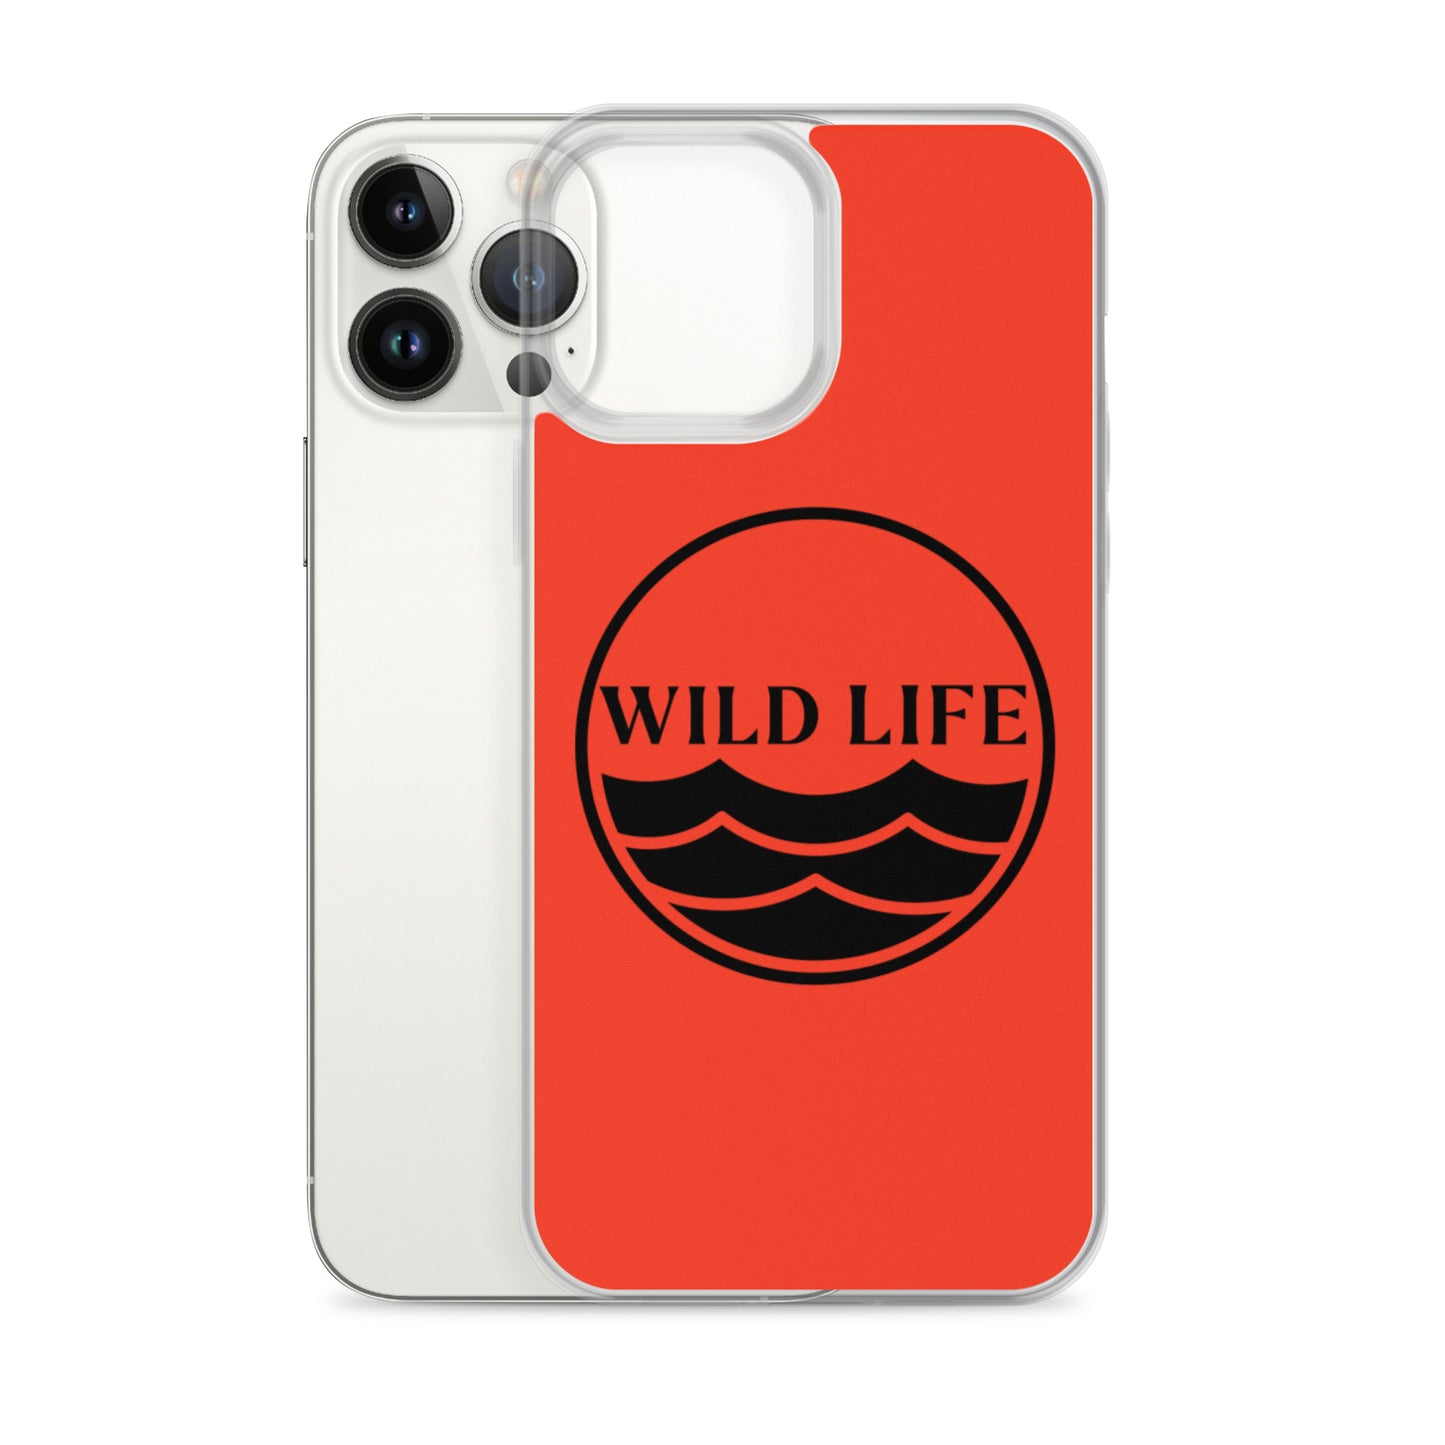 WILD LIFE iPhone Case - Fire Orange